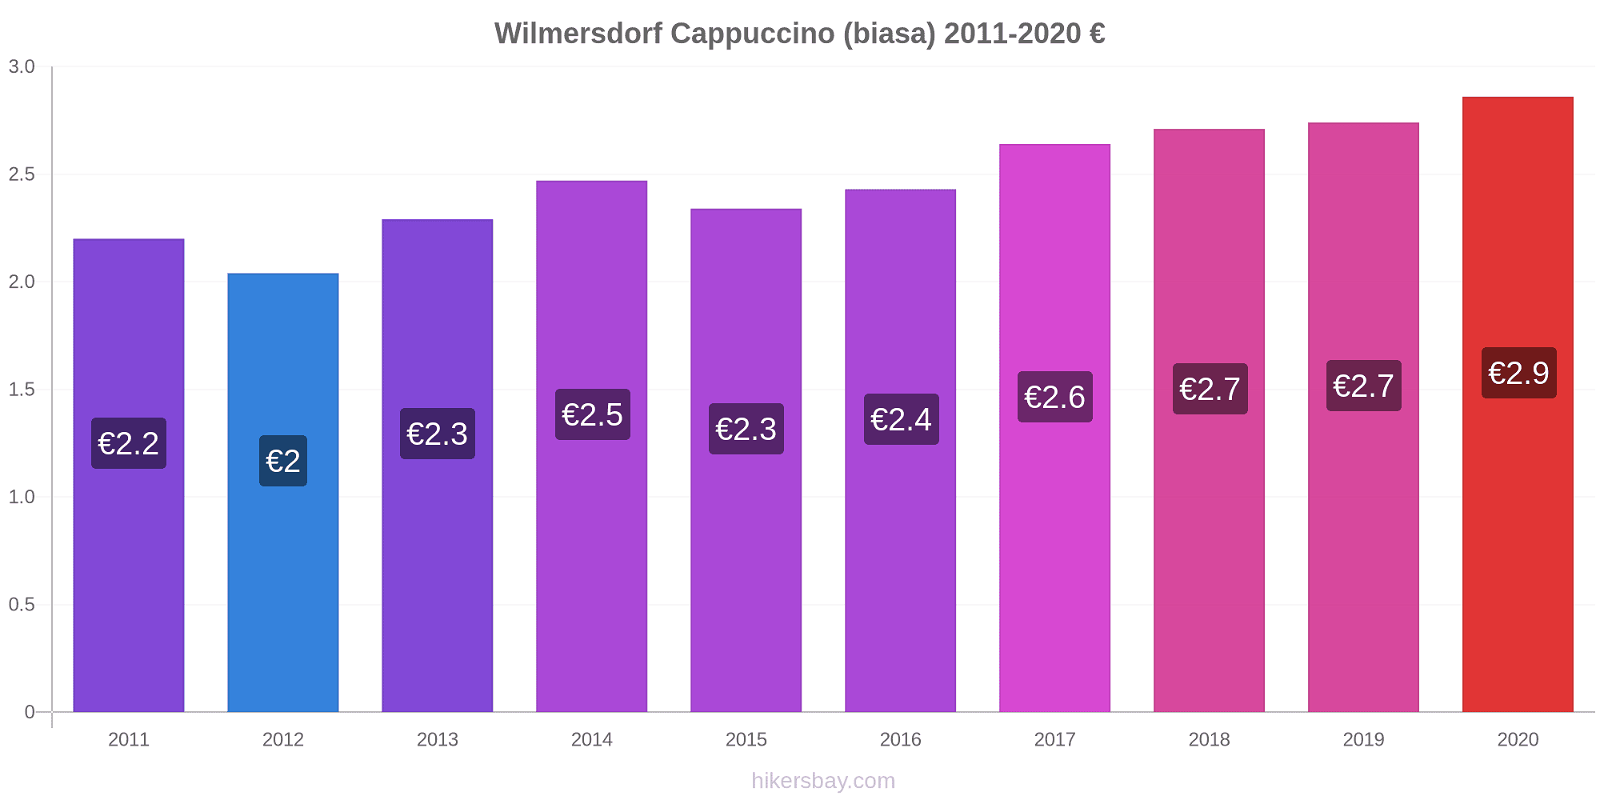 Wilmersdorf perubahan harga Cappuccino (biasa) hikersbay.com